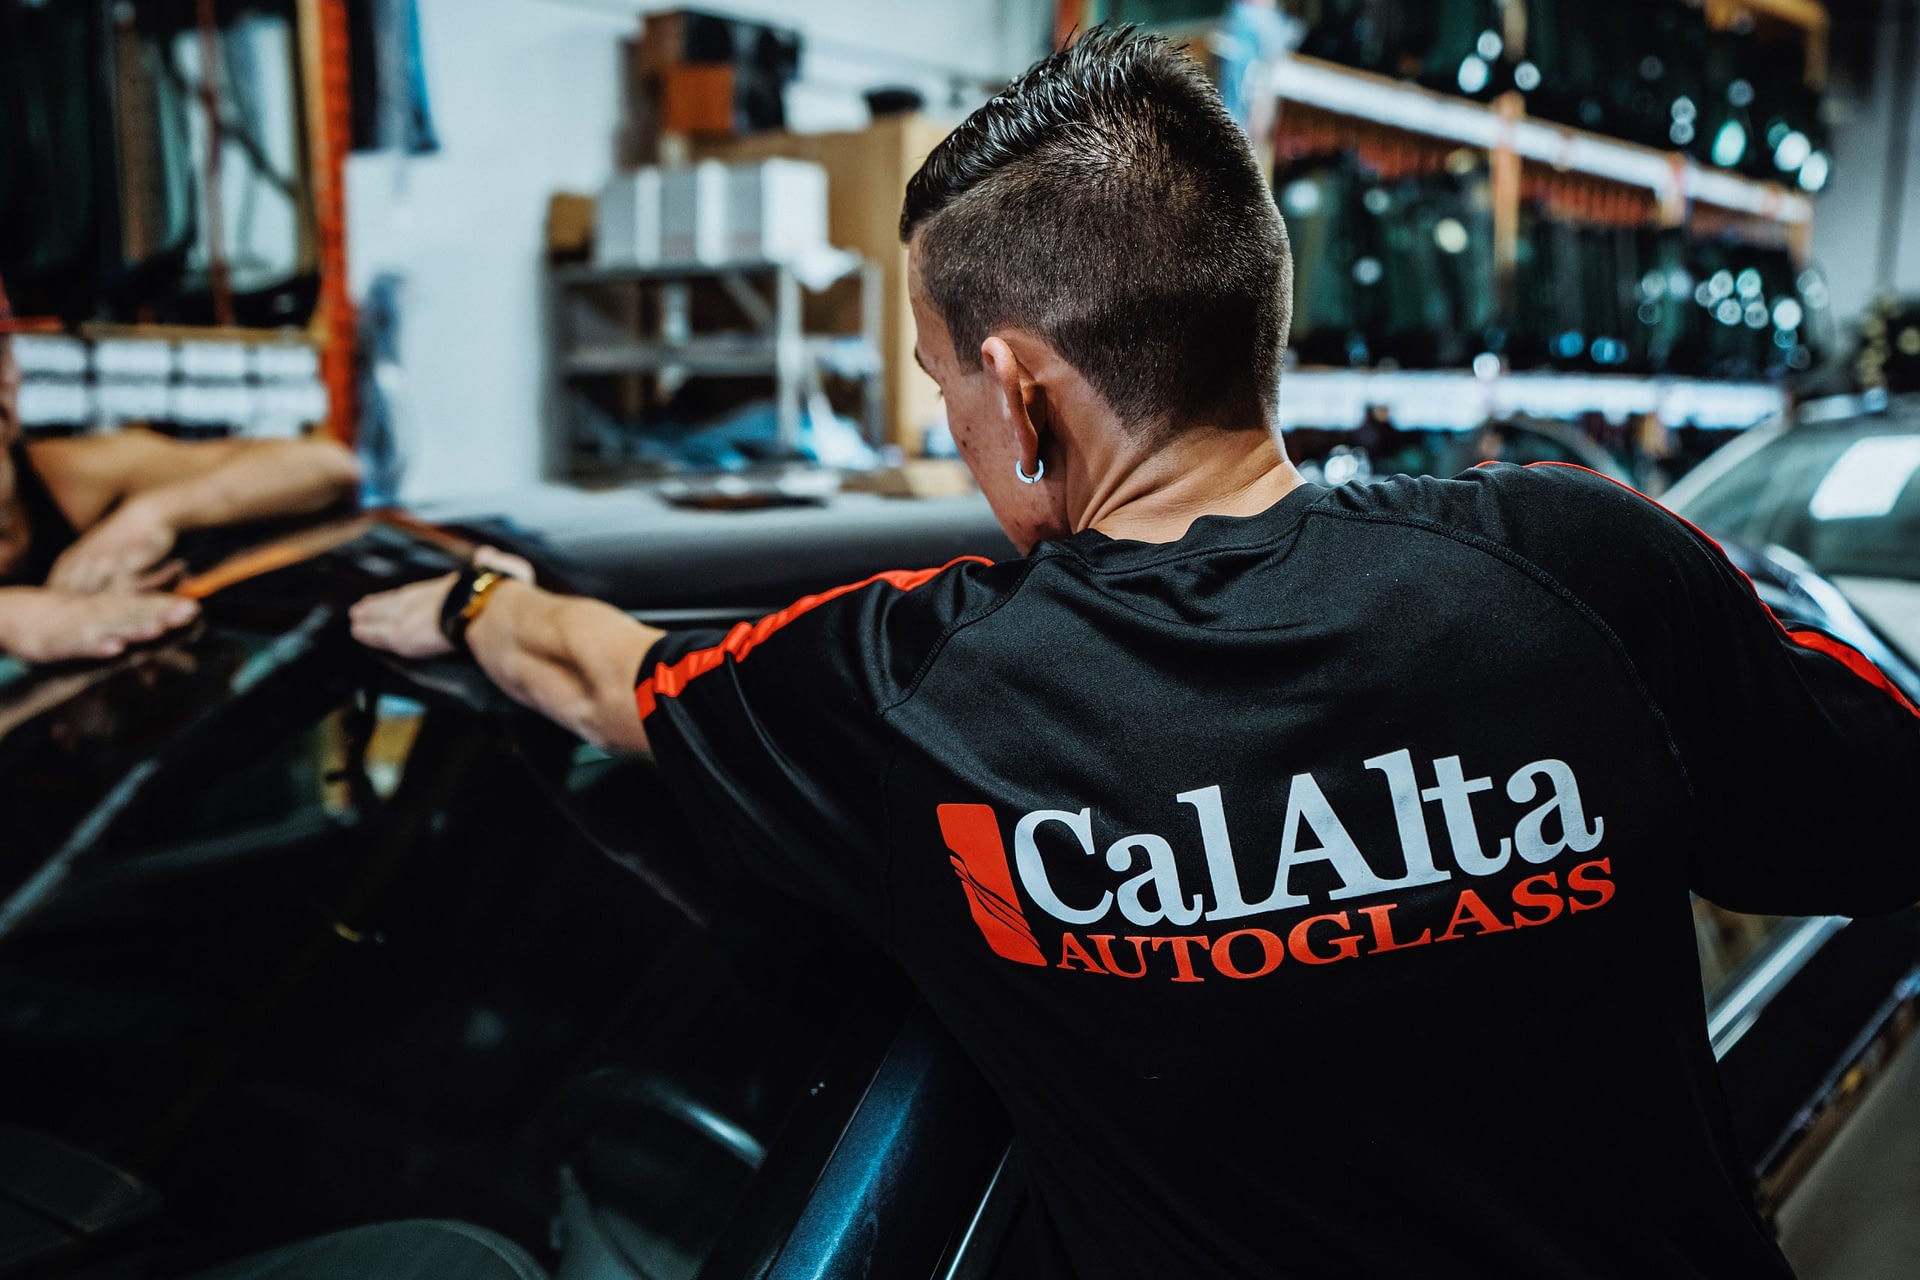 CalAlta Autoglass windshield replacement in Calgary